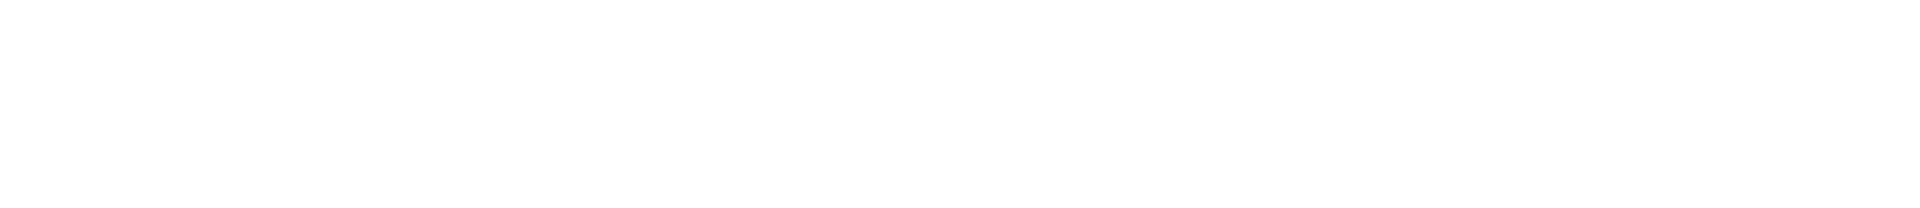 blueriver-logo